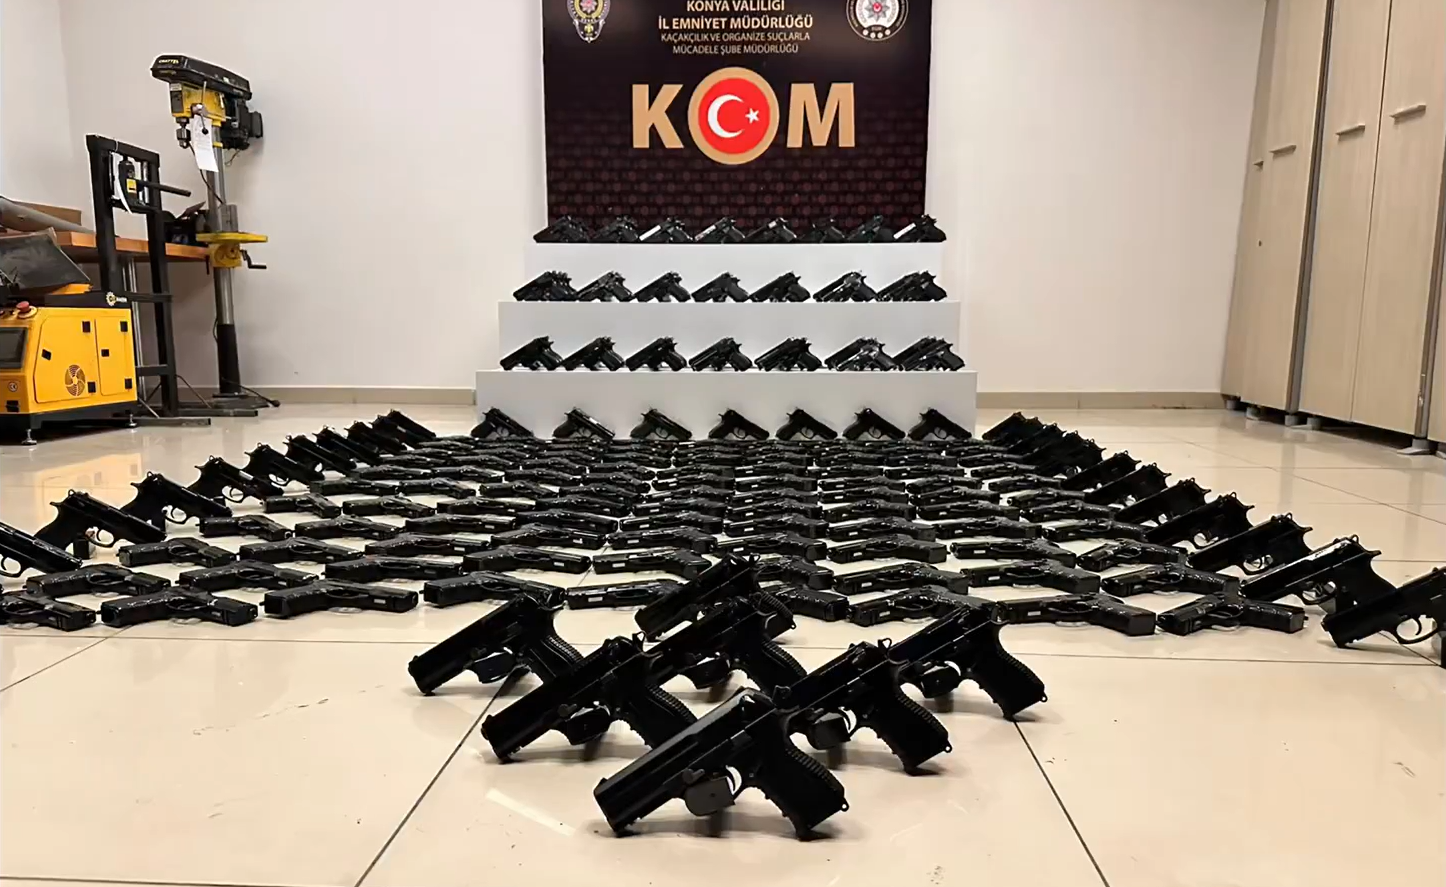 Konya’da operasyon: 225 ruhsatsız tabanca ele geçirildi!